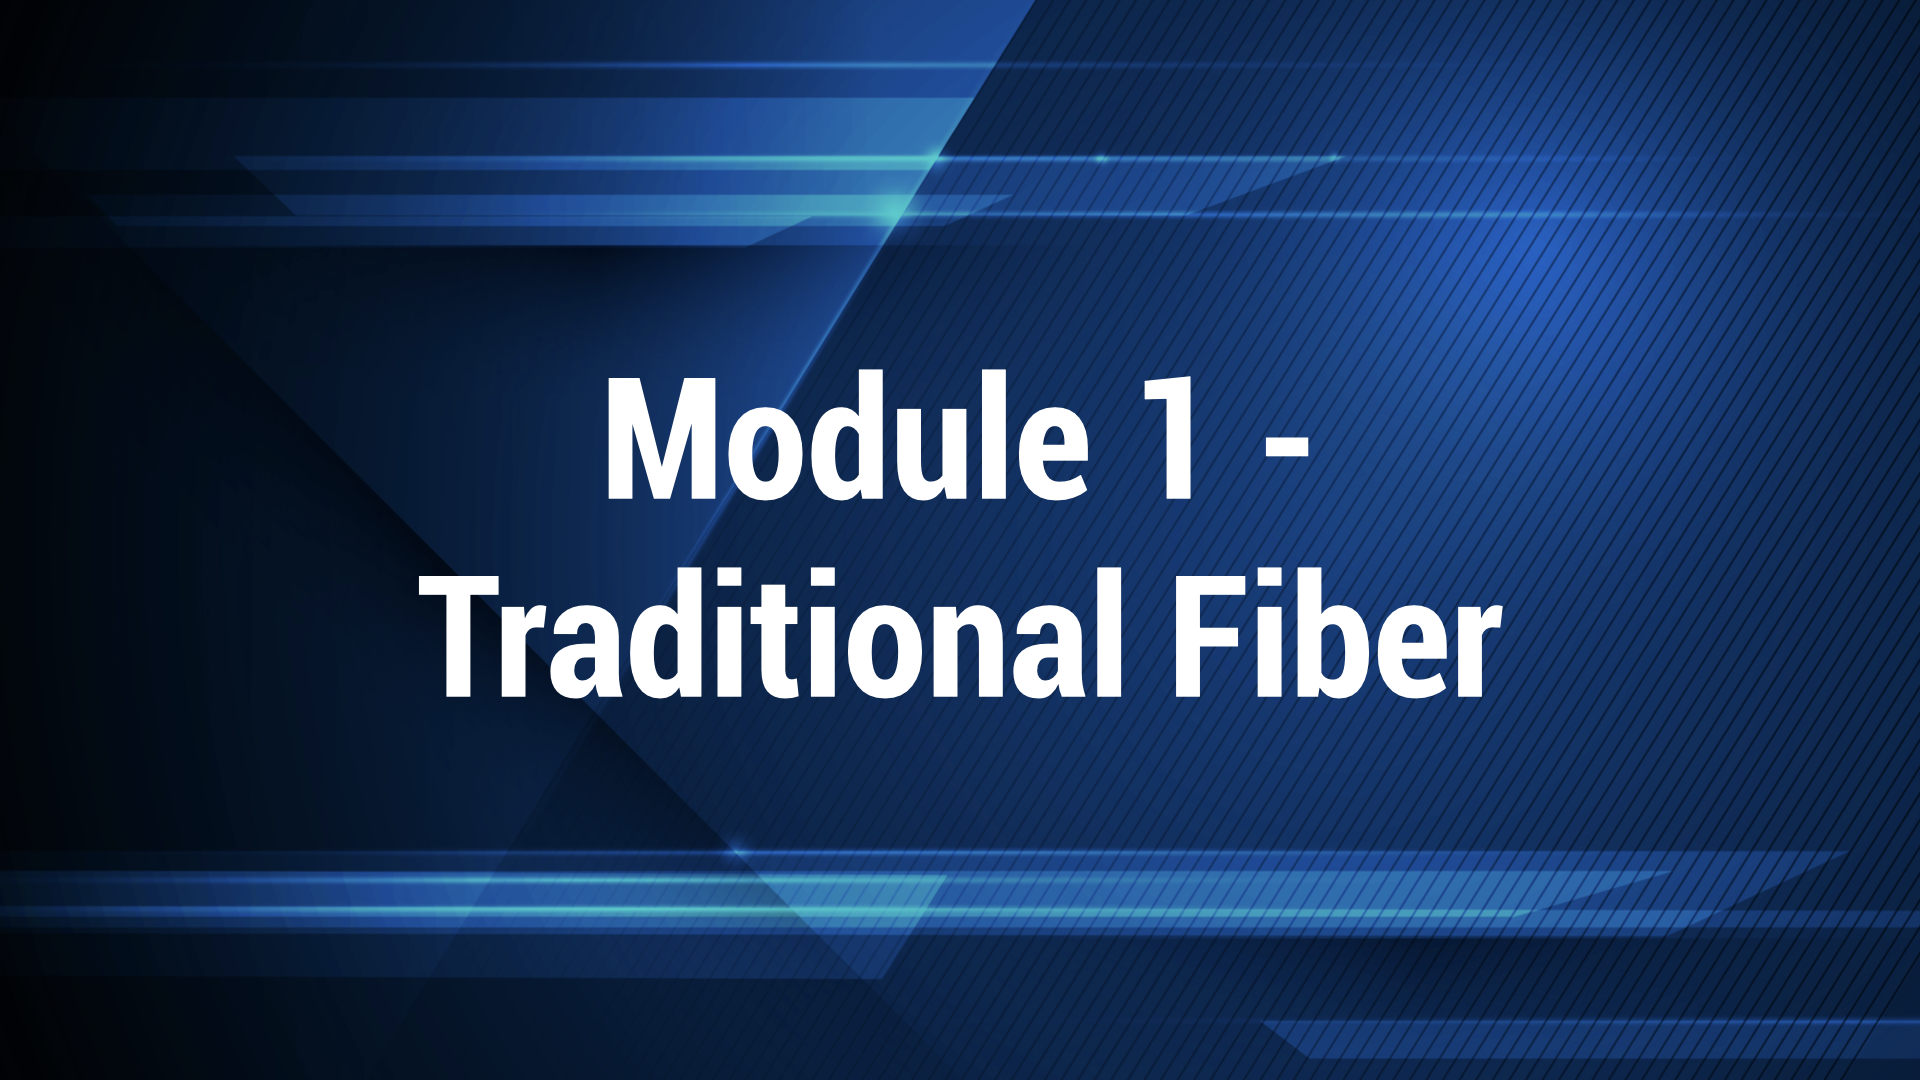 Module 1 - Traditional Fiber